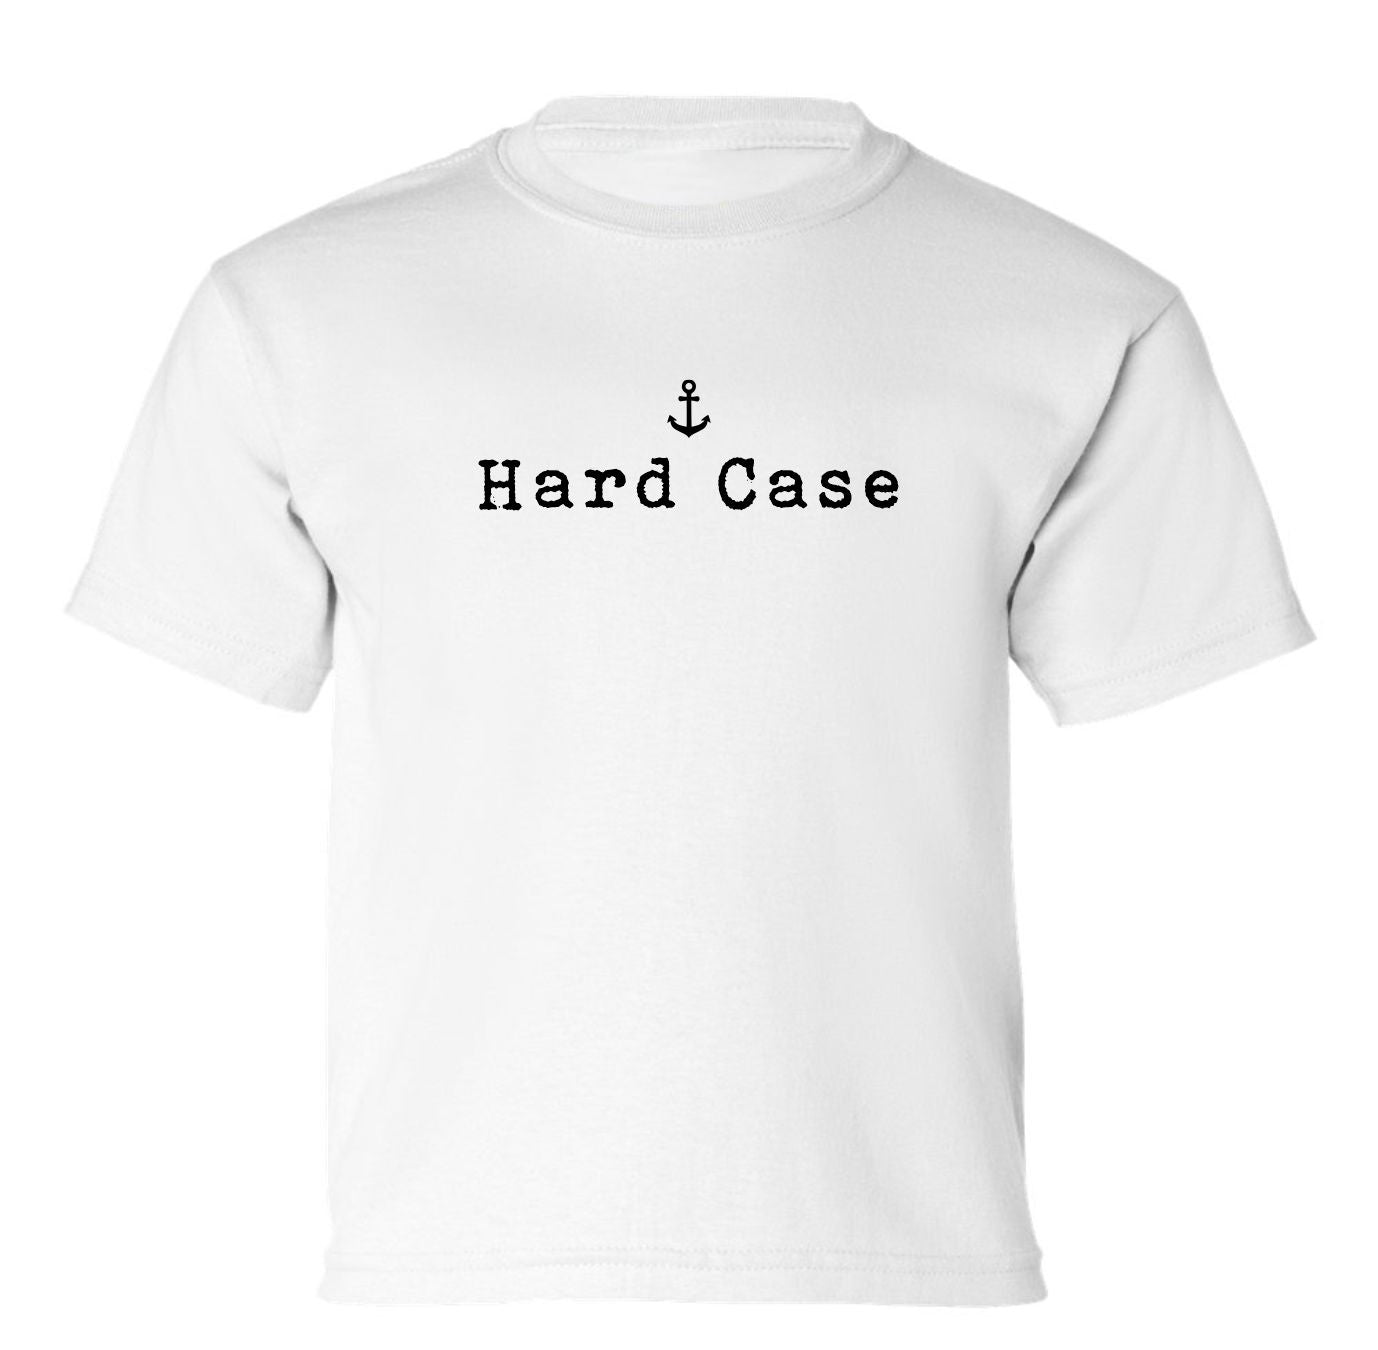 "Hard Case" Toddler/Youth T-Shirt